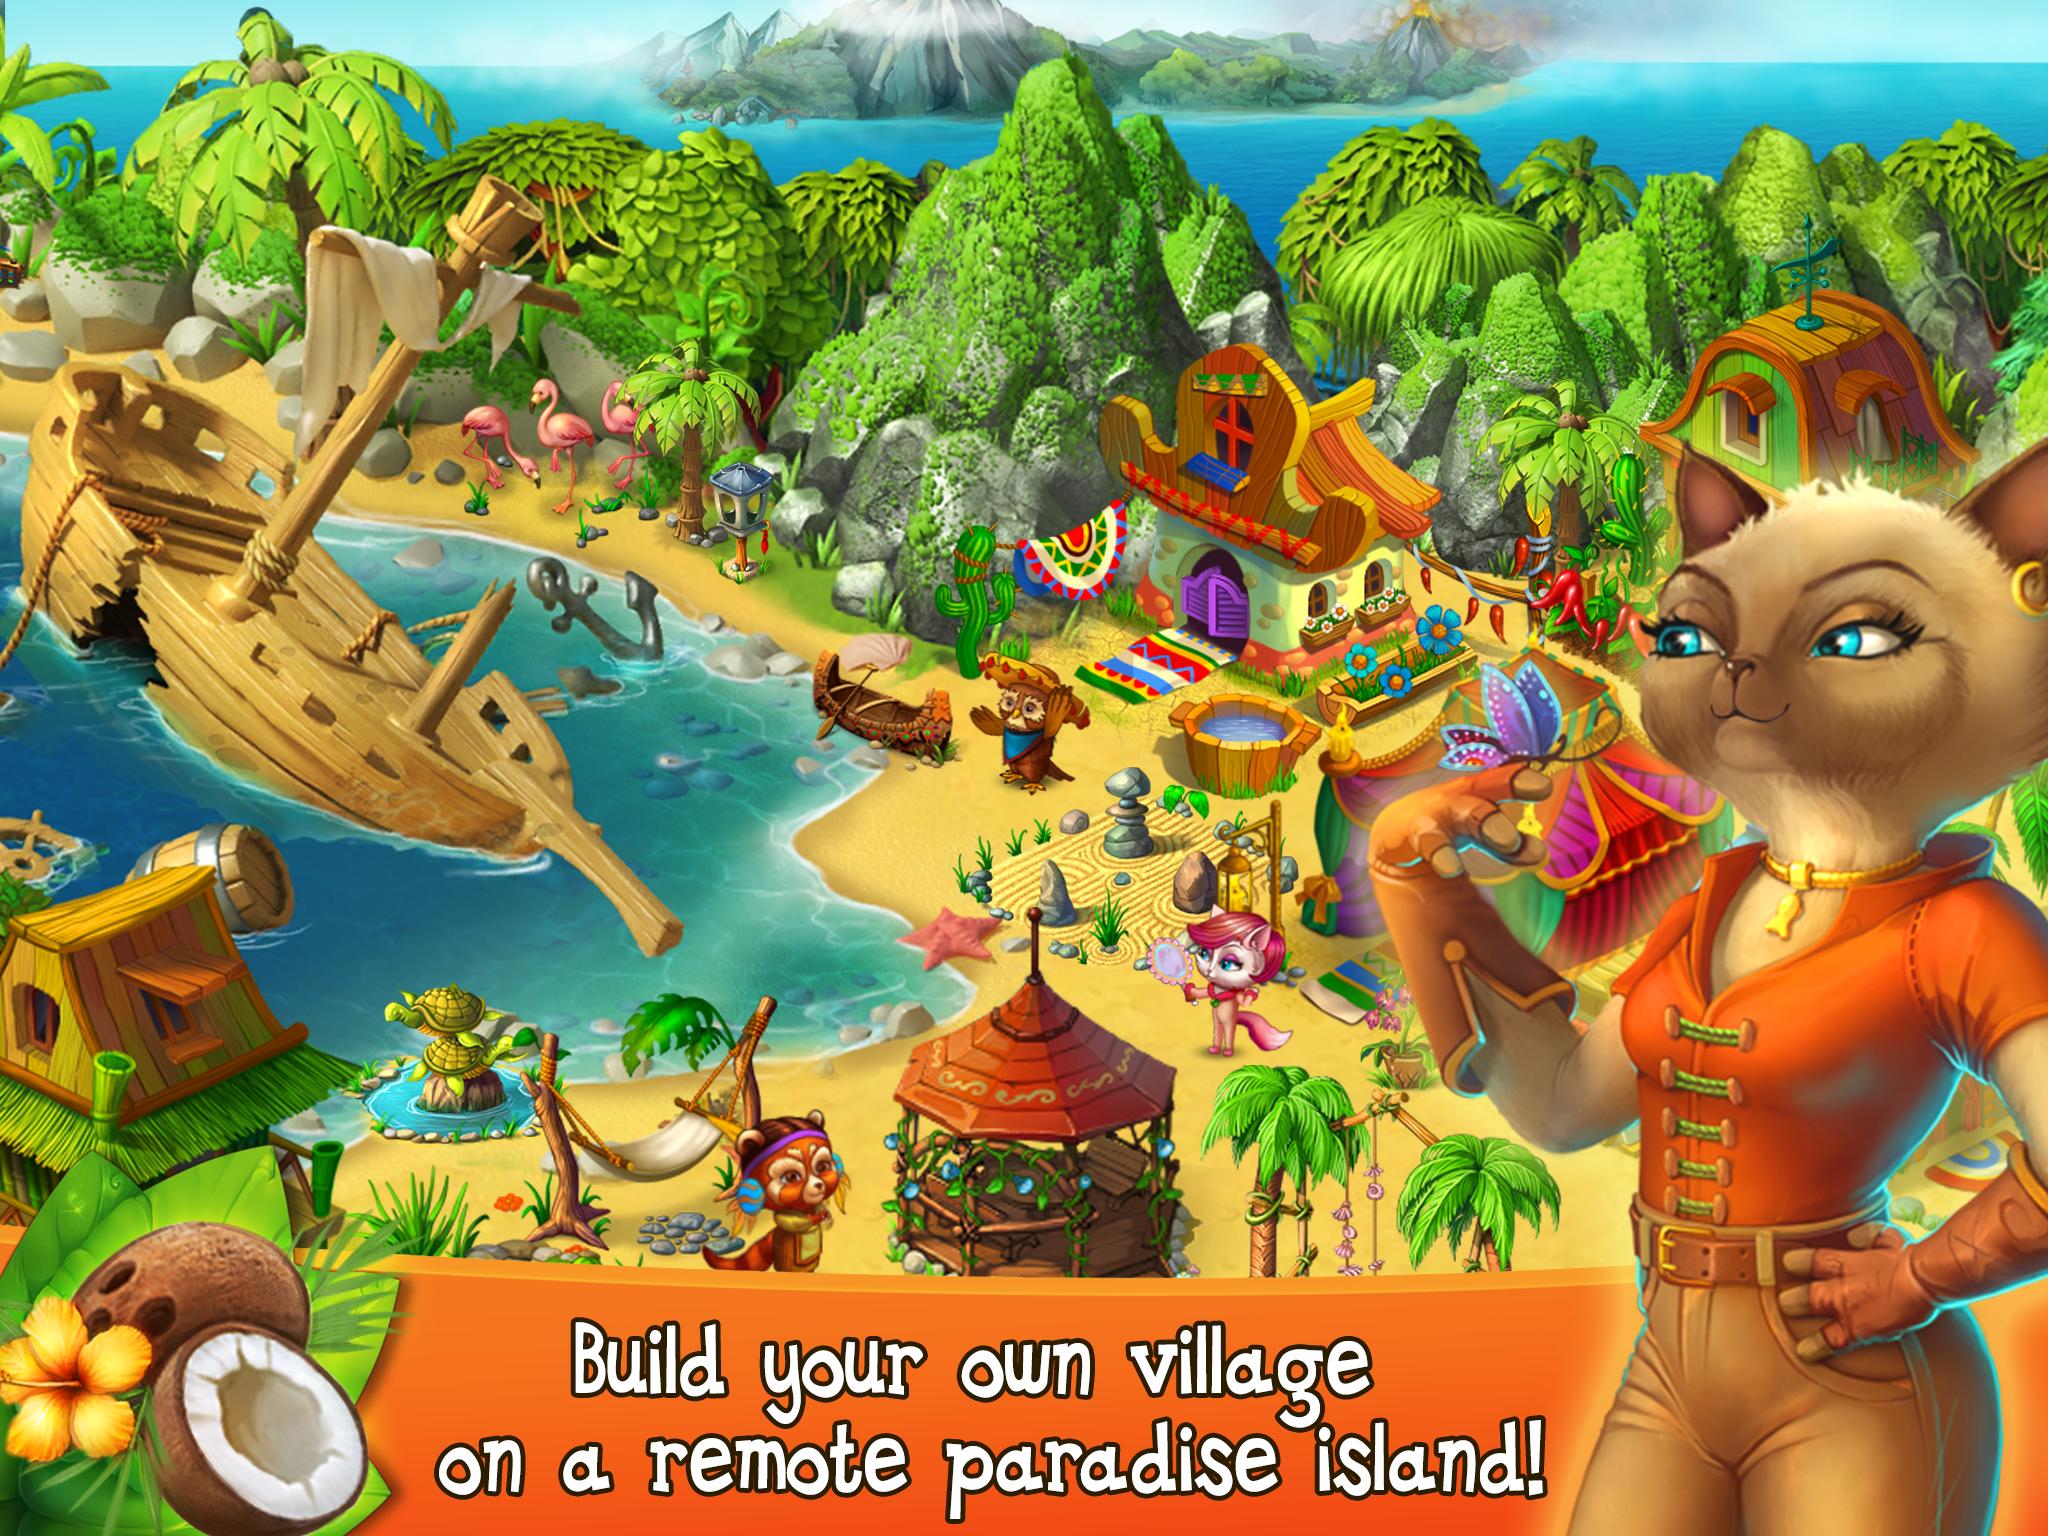 Создавать острова игра. Райский остров игра. Village игра. Игра ферма на острове. Island игра на андроид.